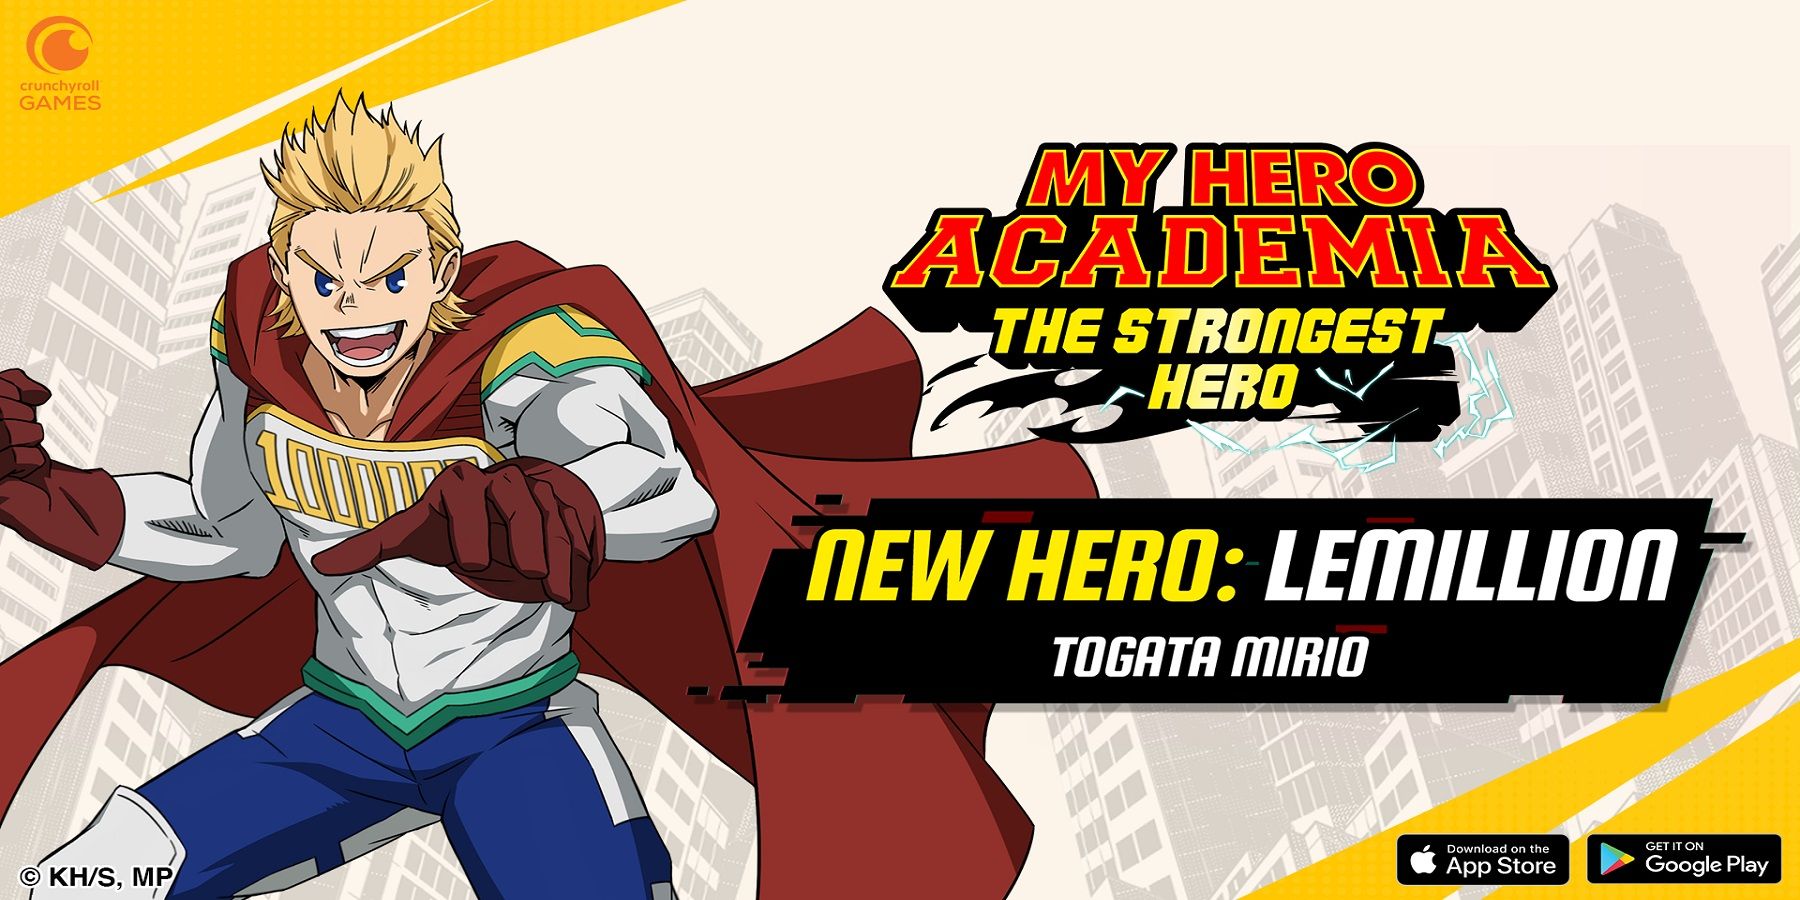 My Hero Academia Strongest Hero Lemillion Feature jpg